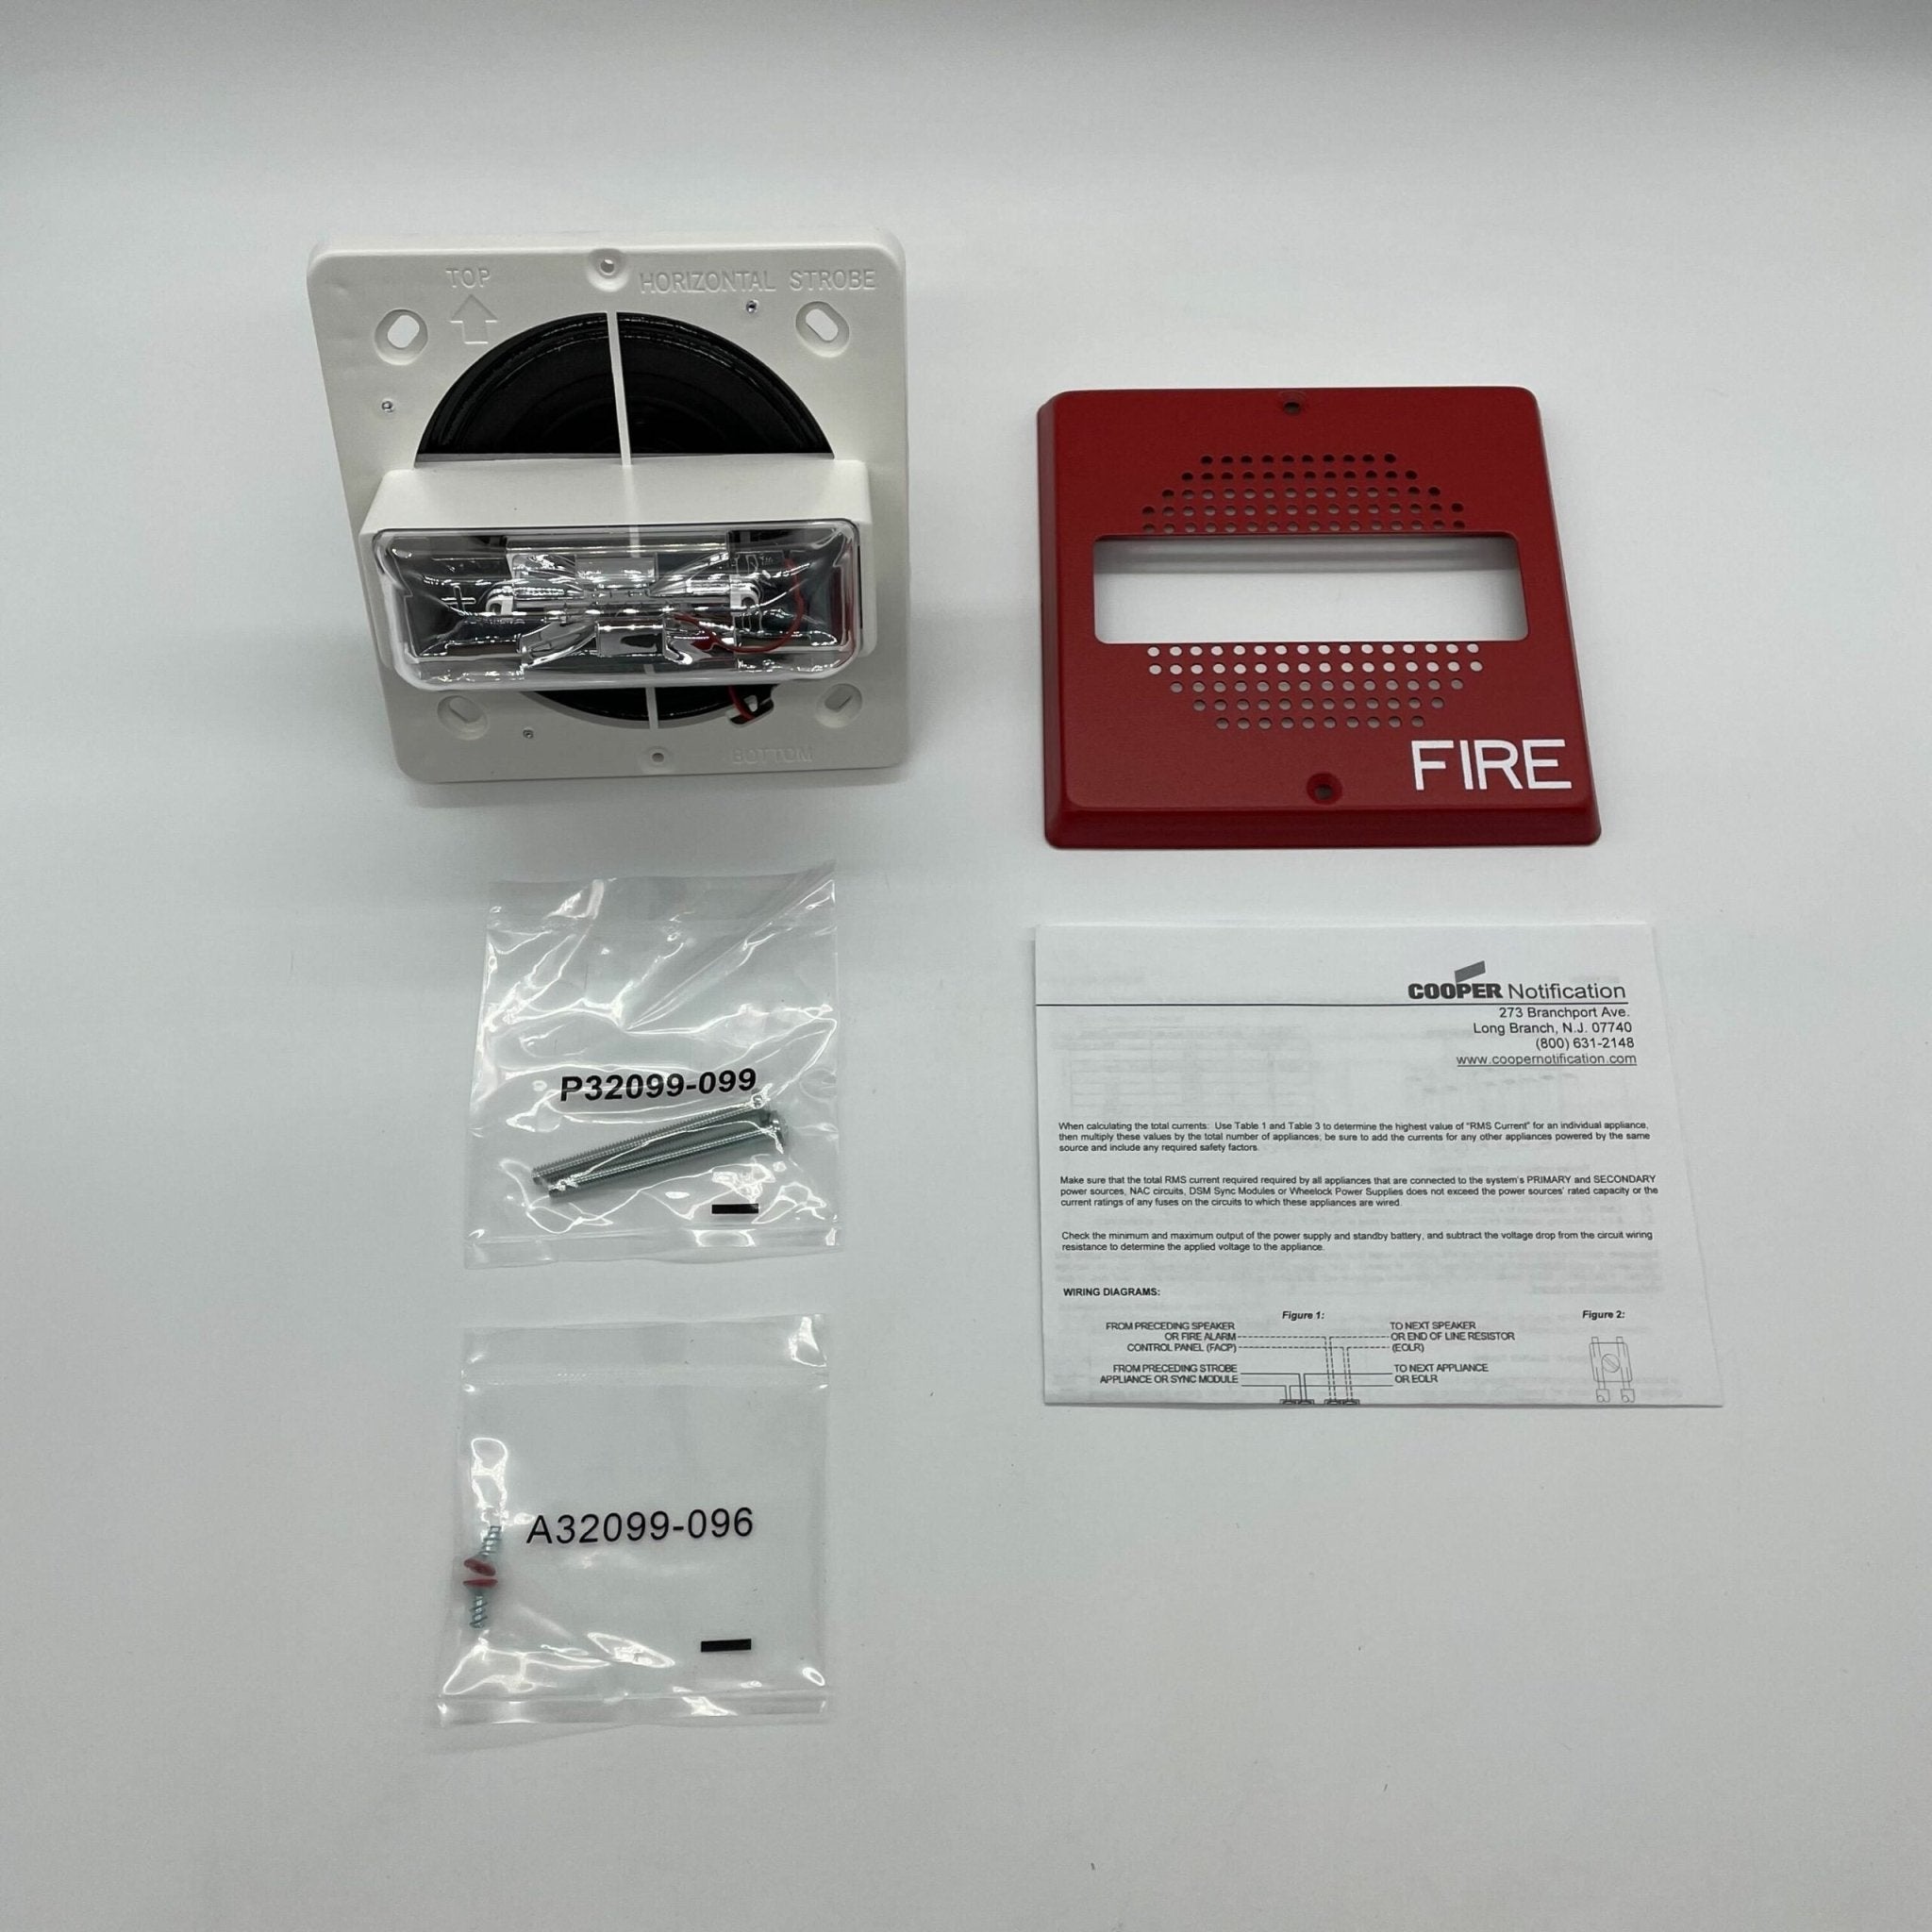 Wheelock E70-24MCW-FR - The Fire Alarm Supplier